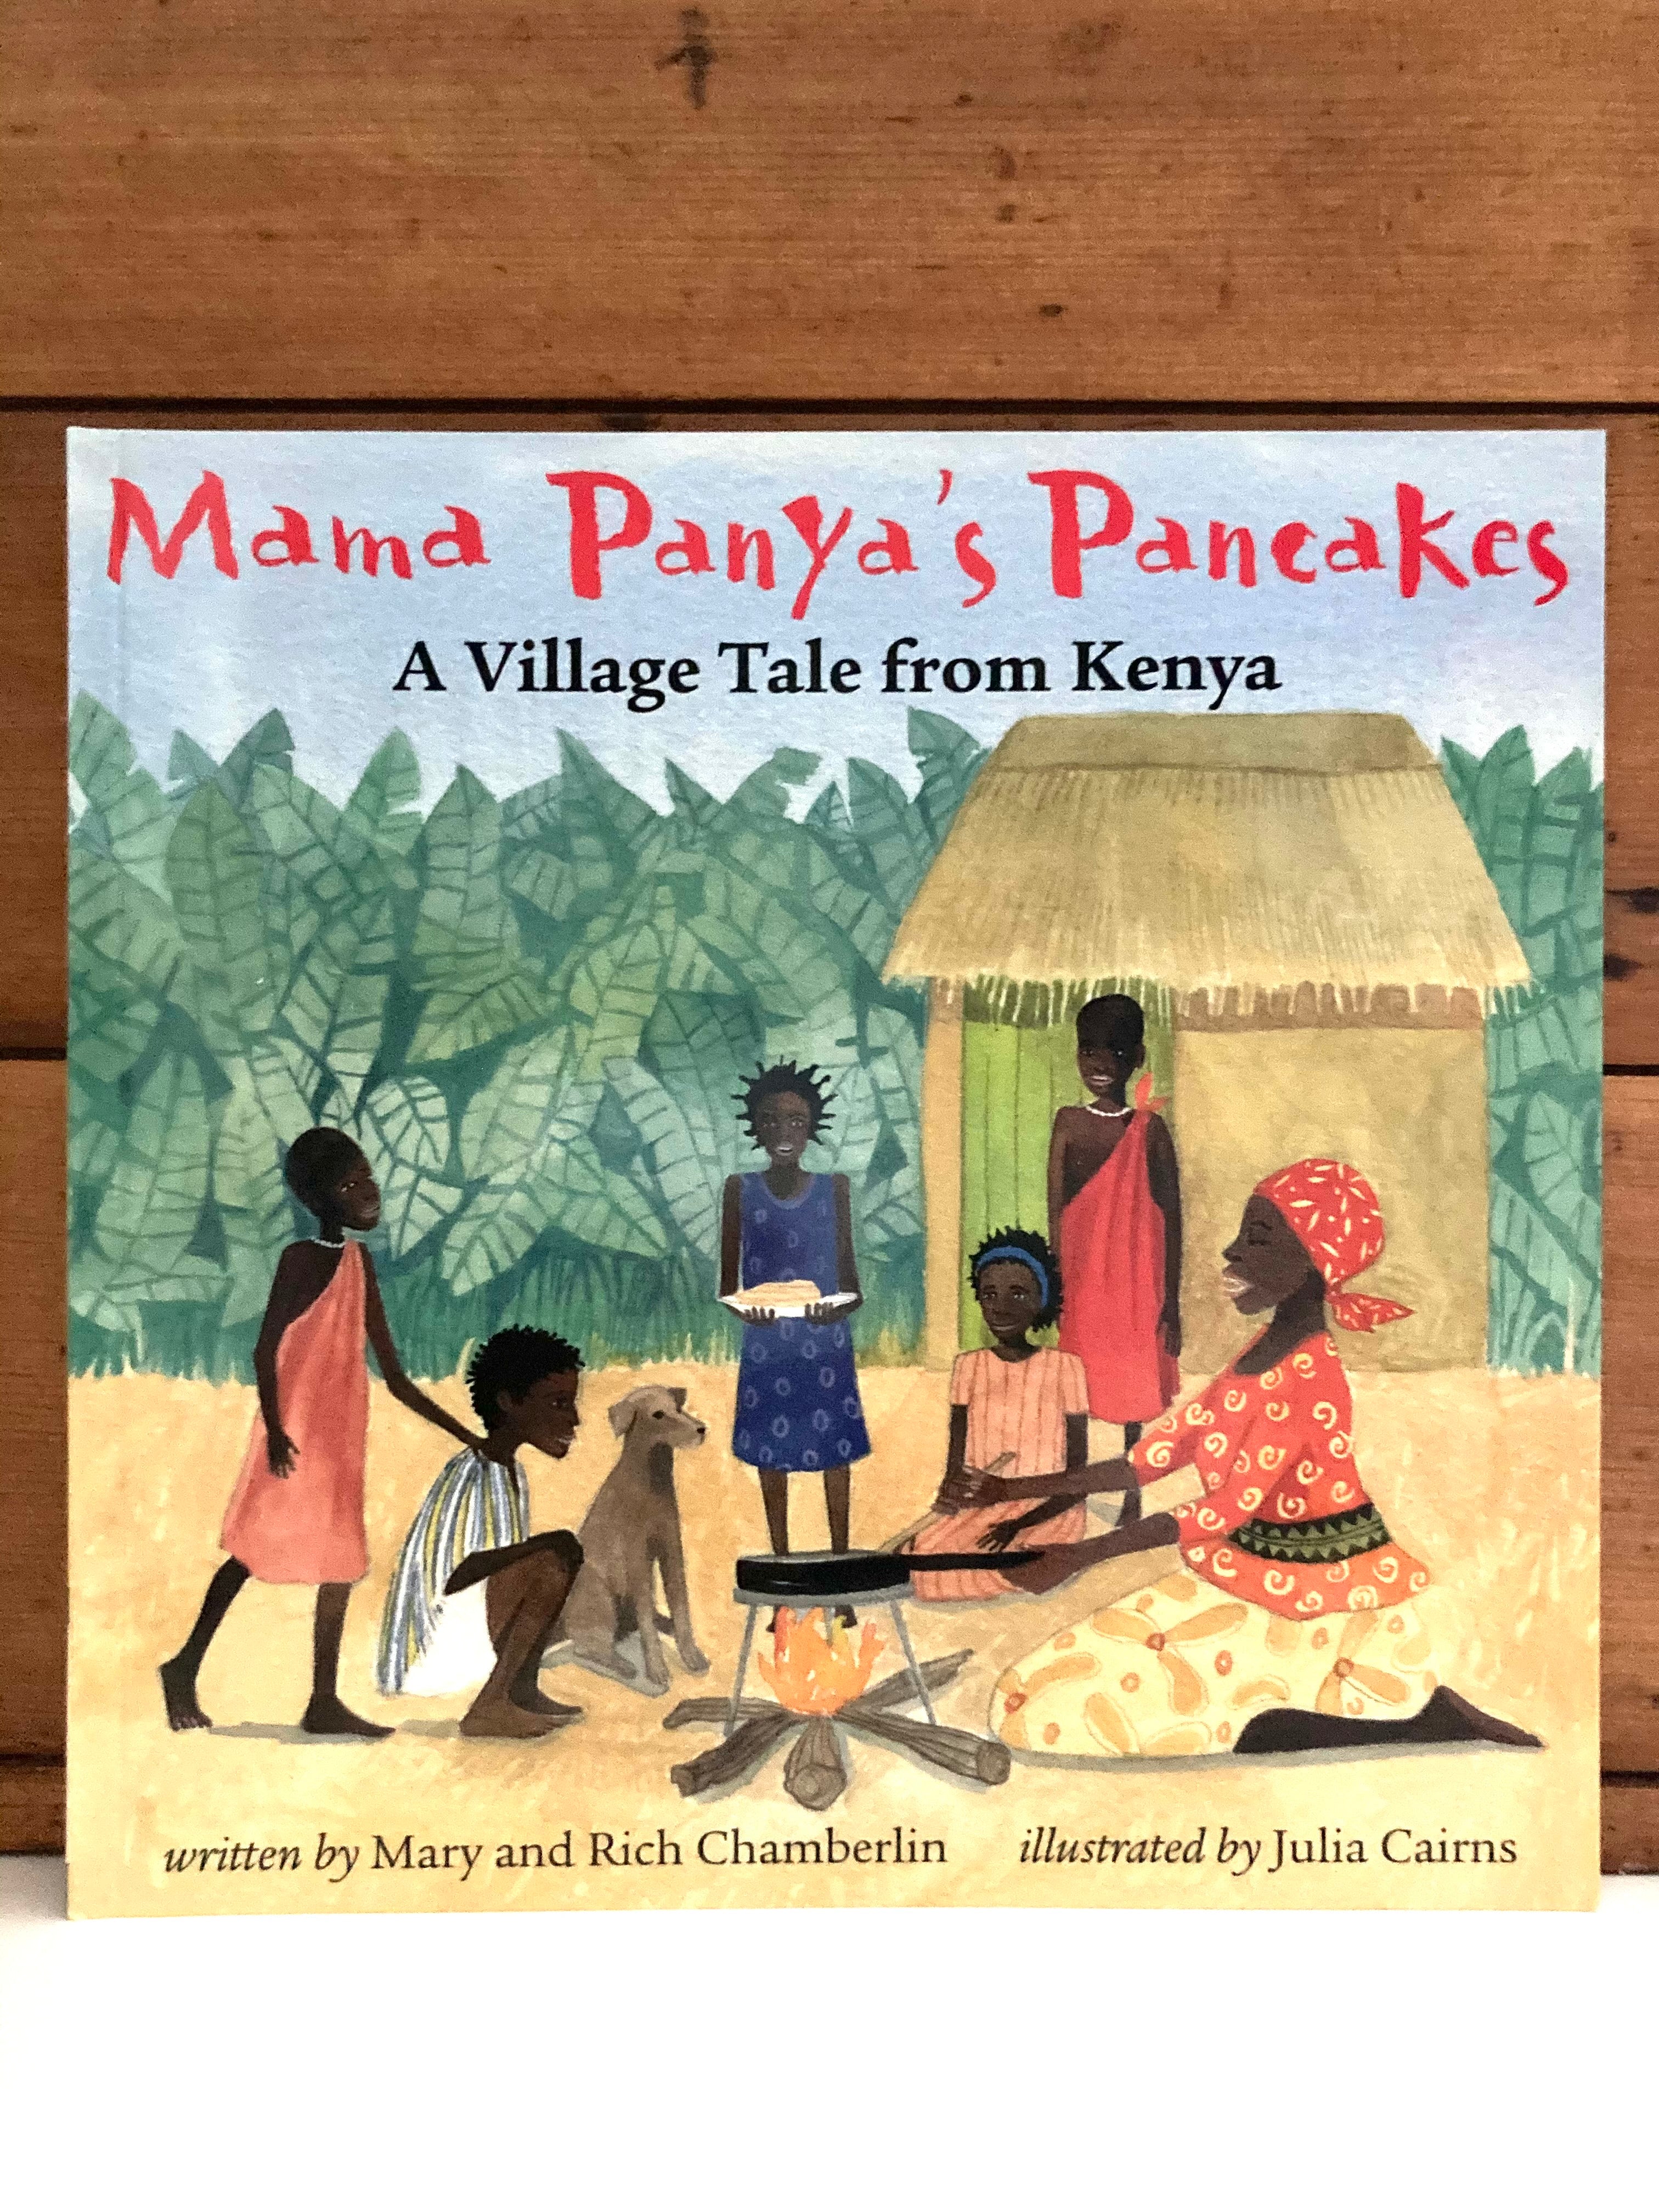 Picture　Acorns　–　Gnomes　Book　MAMA　PANYA'S　PANCAKES　Educational　Children's